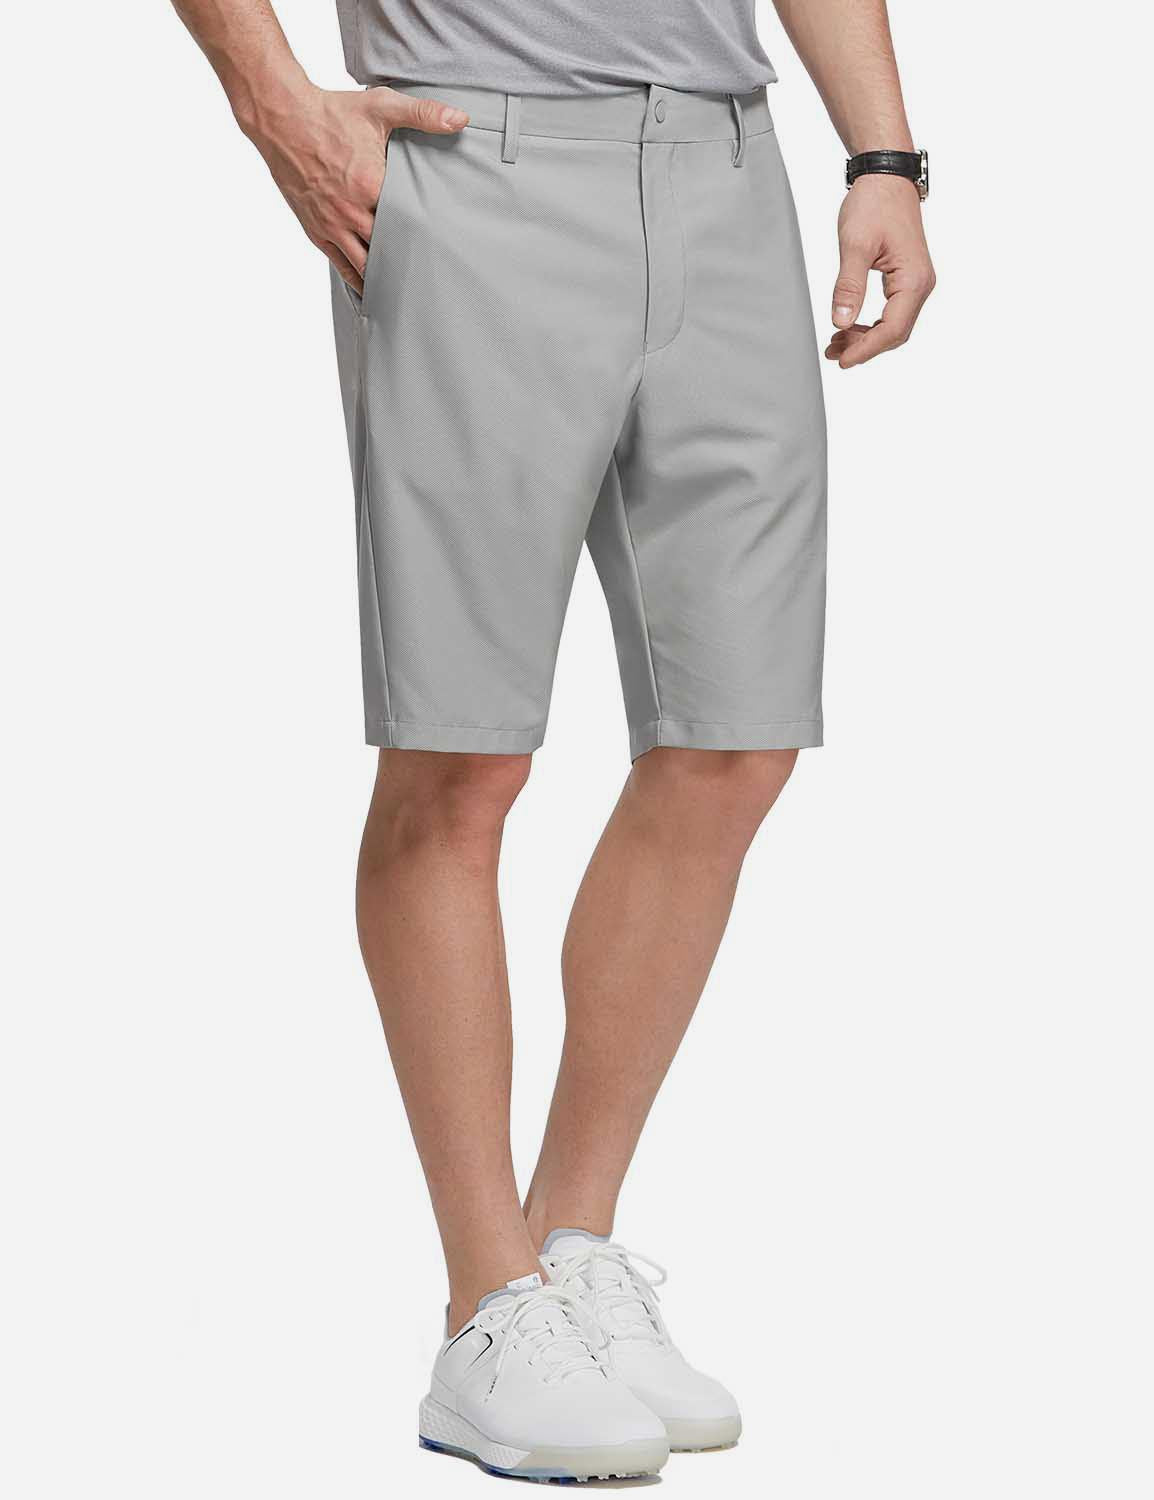 Baleaf Men's 10' UPF 50+ Lightweight Golf Shorts w Zipper Pockets cga005 Gray Side